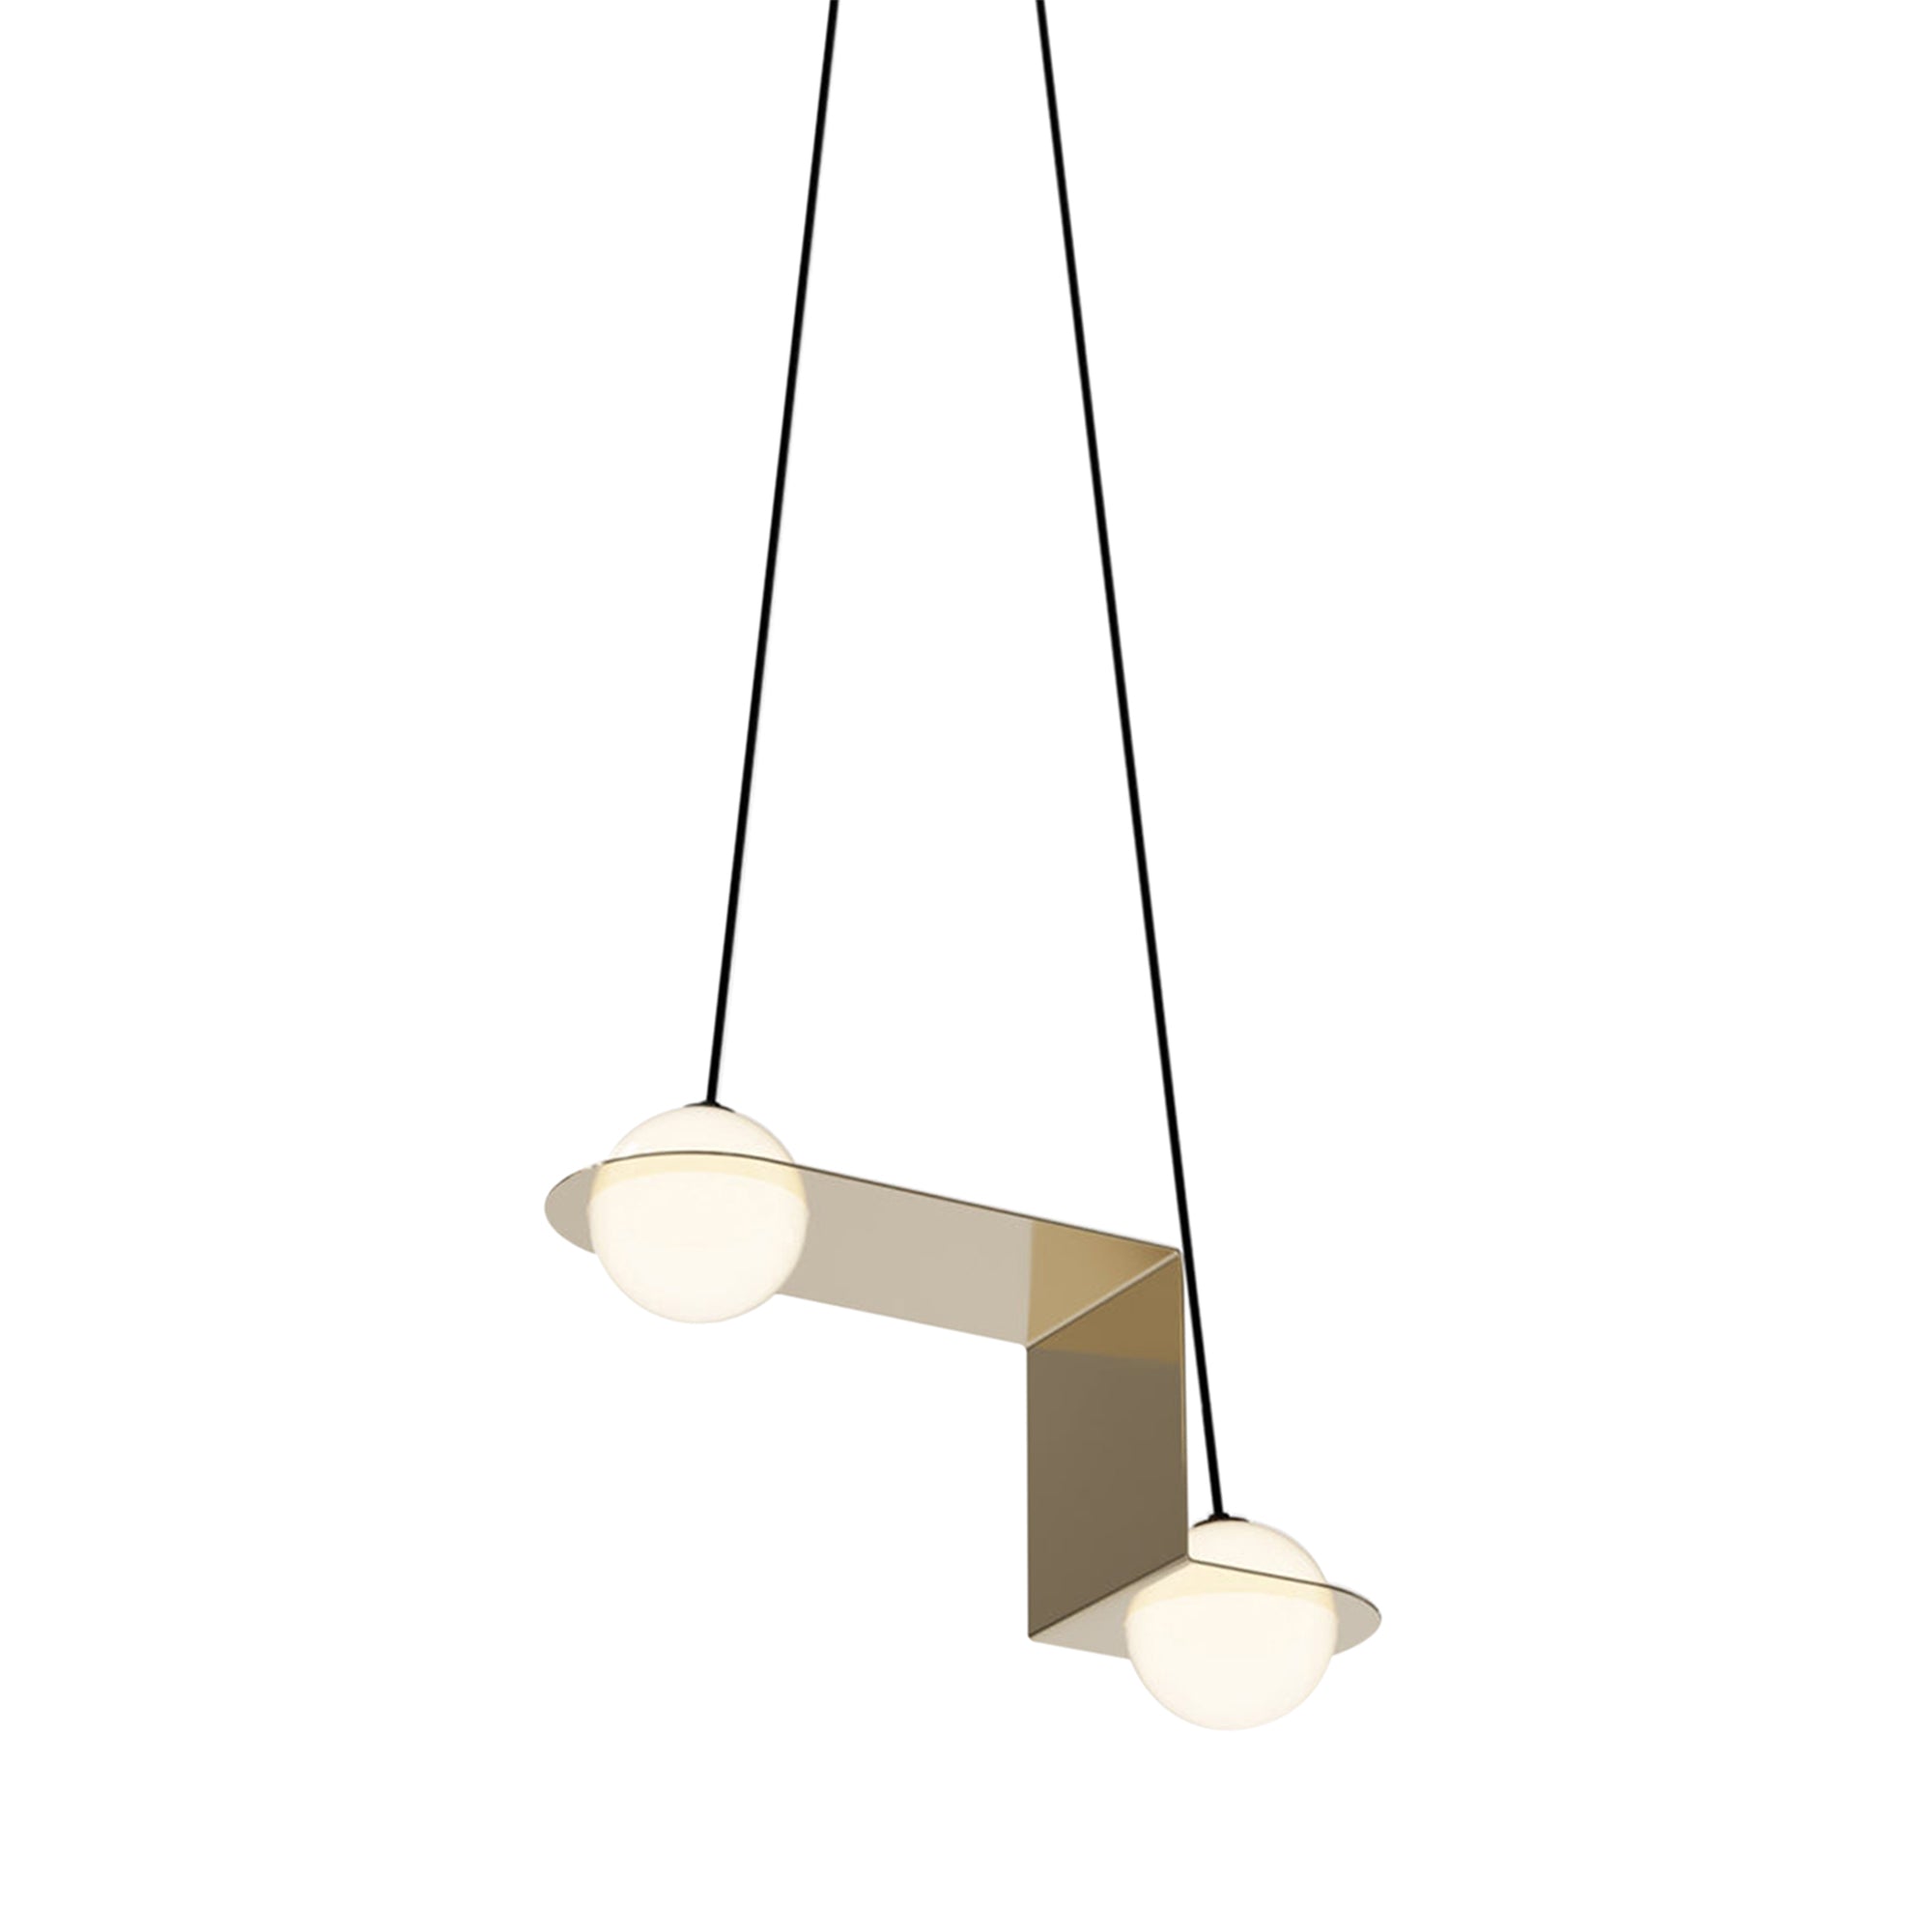 Laurent 06 Suspension Lamp: Brass + Black + Angled Wires